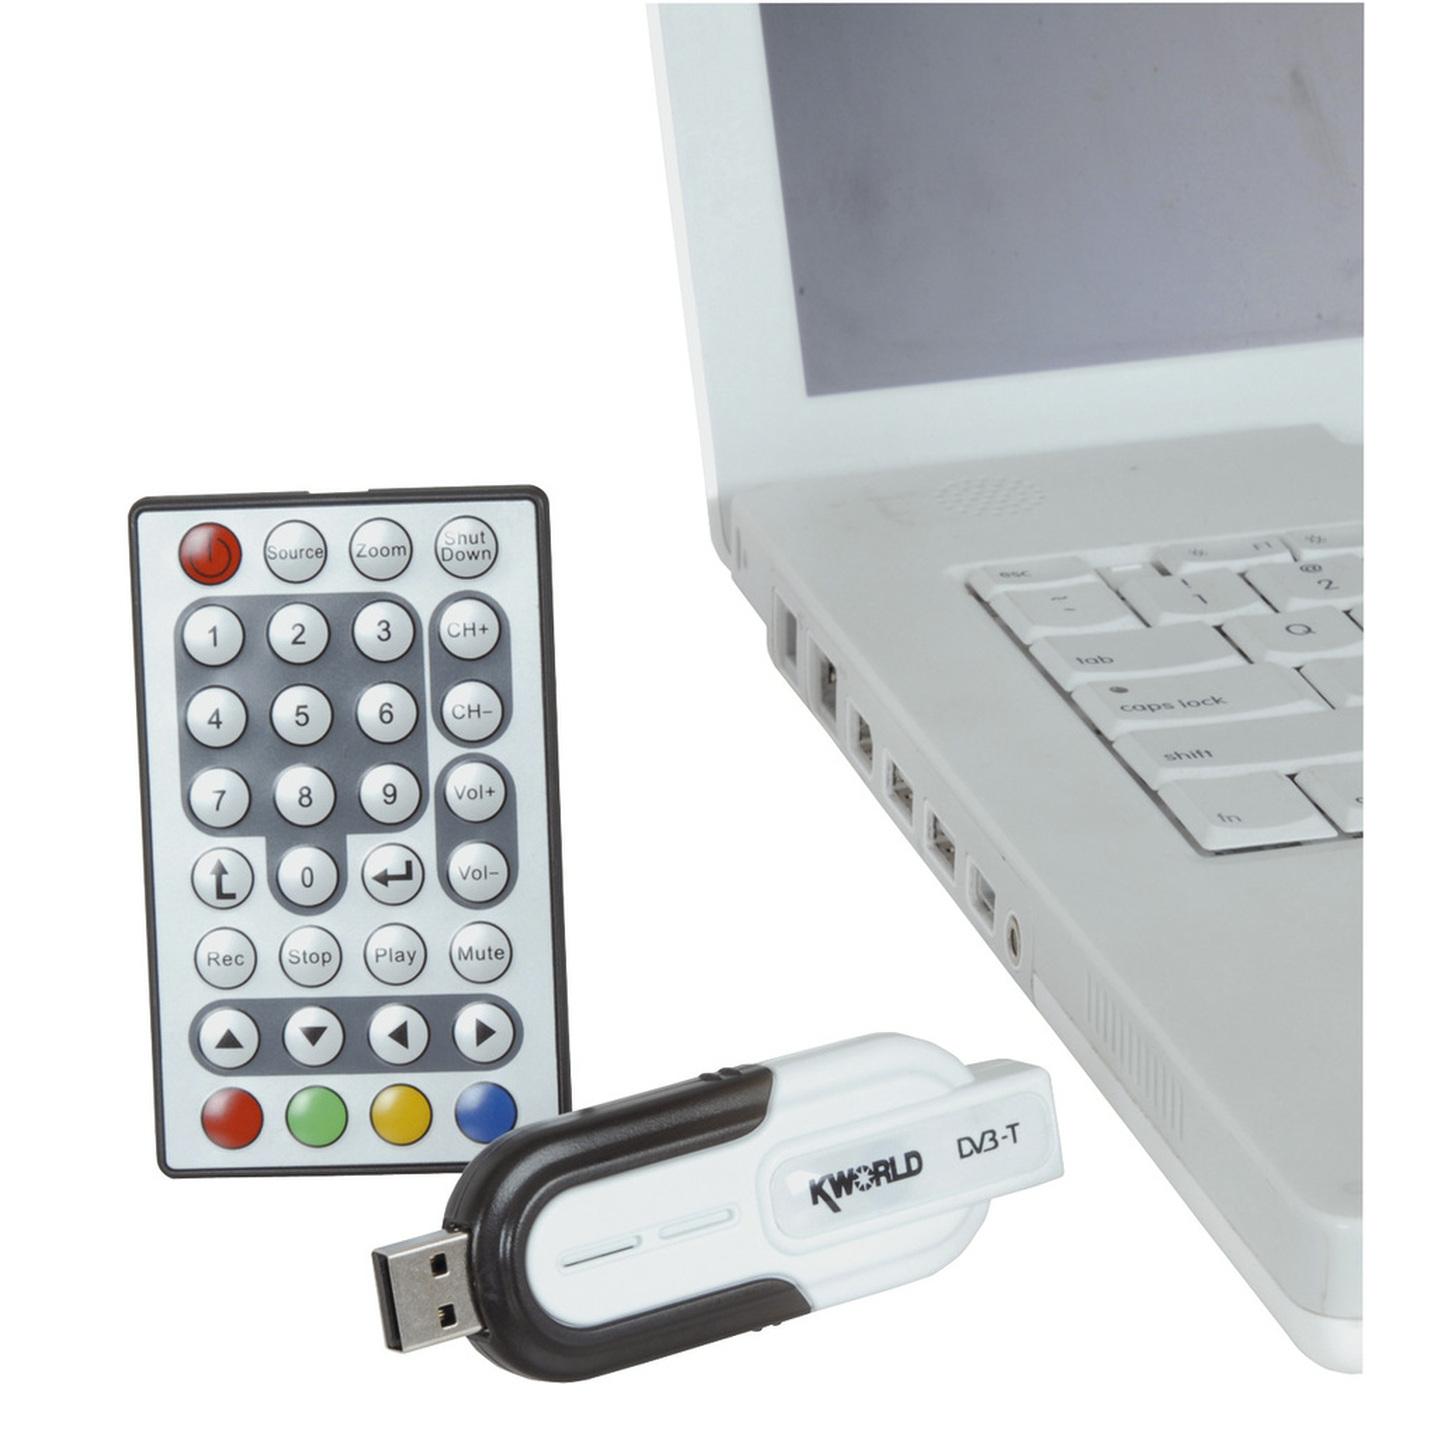 USB Digital TV Stick